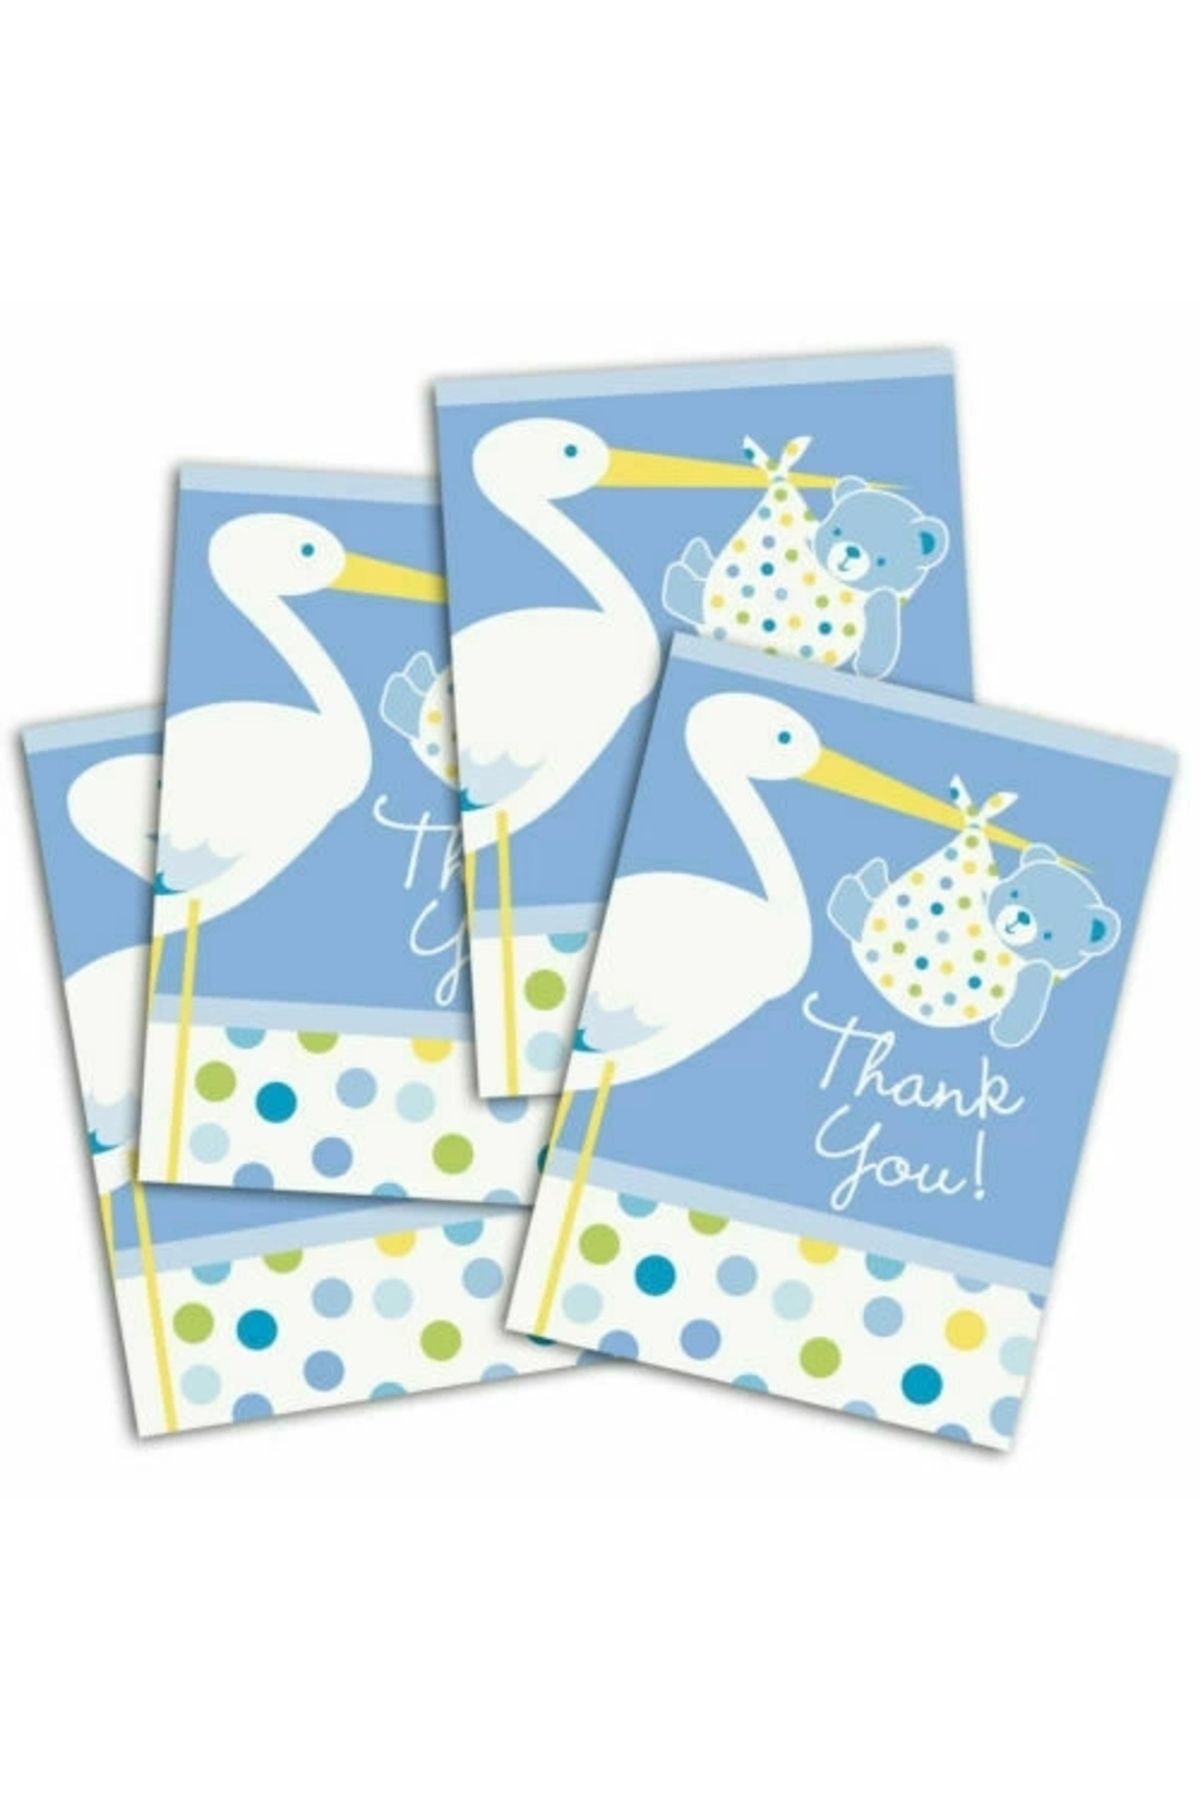 ls locco Baby Shower / Baby Boy Stork Teşekkür Zarfı (8 ADET) - Mavi Renk